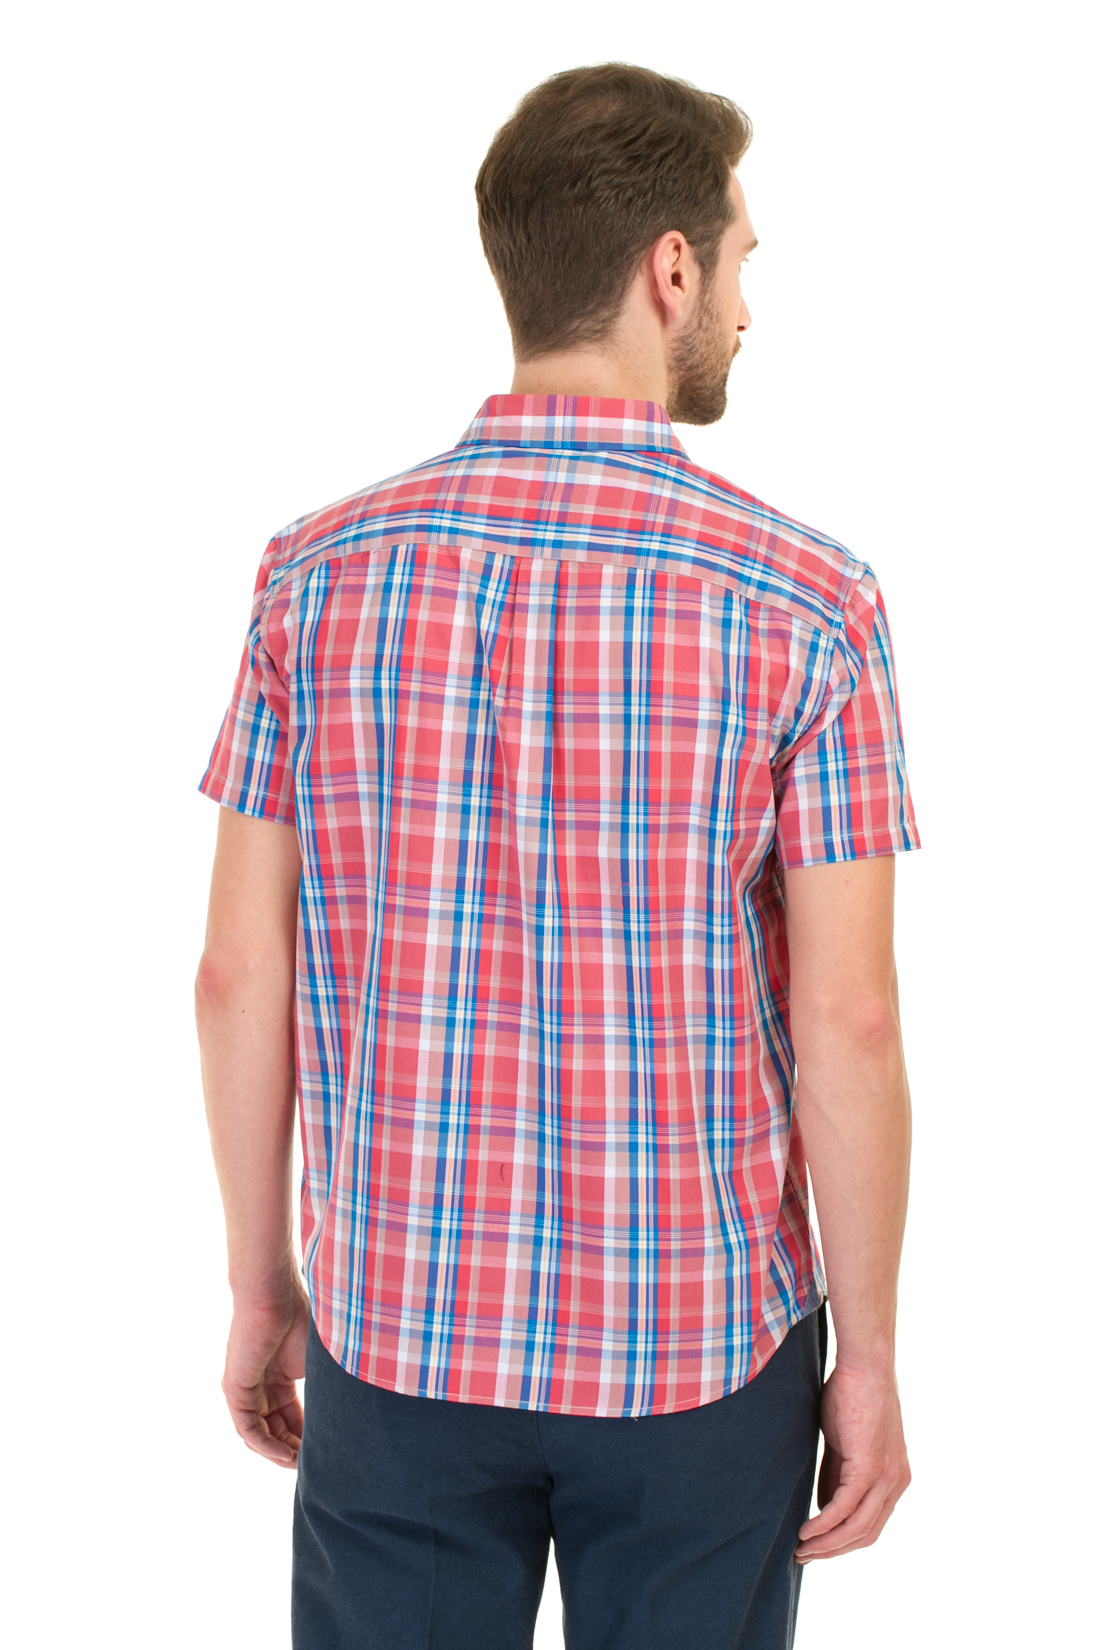 Рубашка в яркую клетку (арт. baon B687008), размер S, цвет розовый Рубашка в яркую клетку (арт. baon B687008) - фото 2